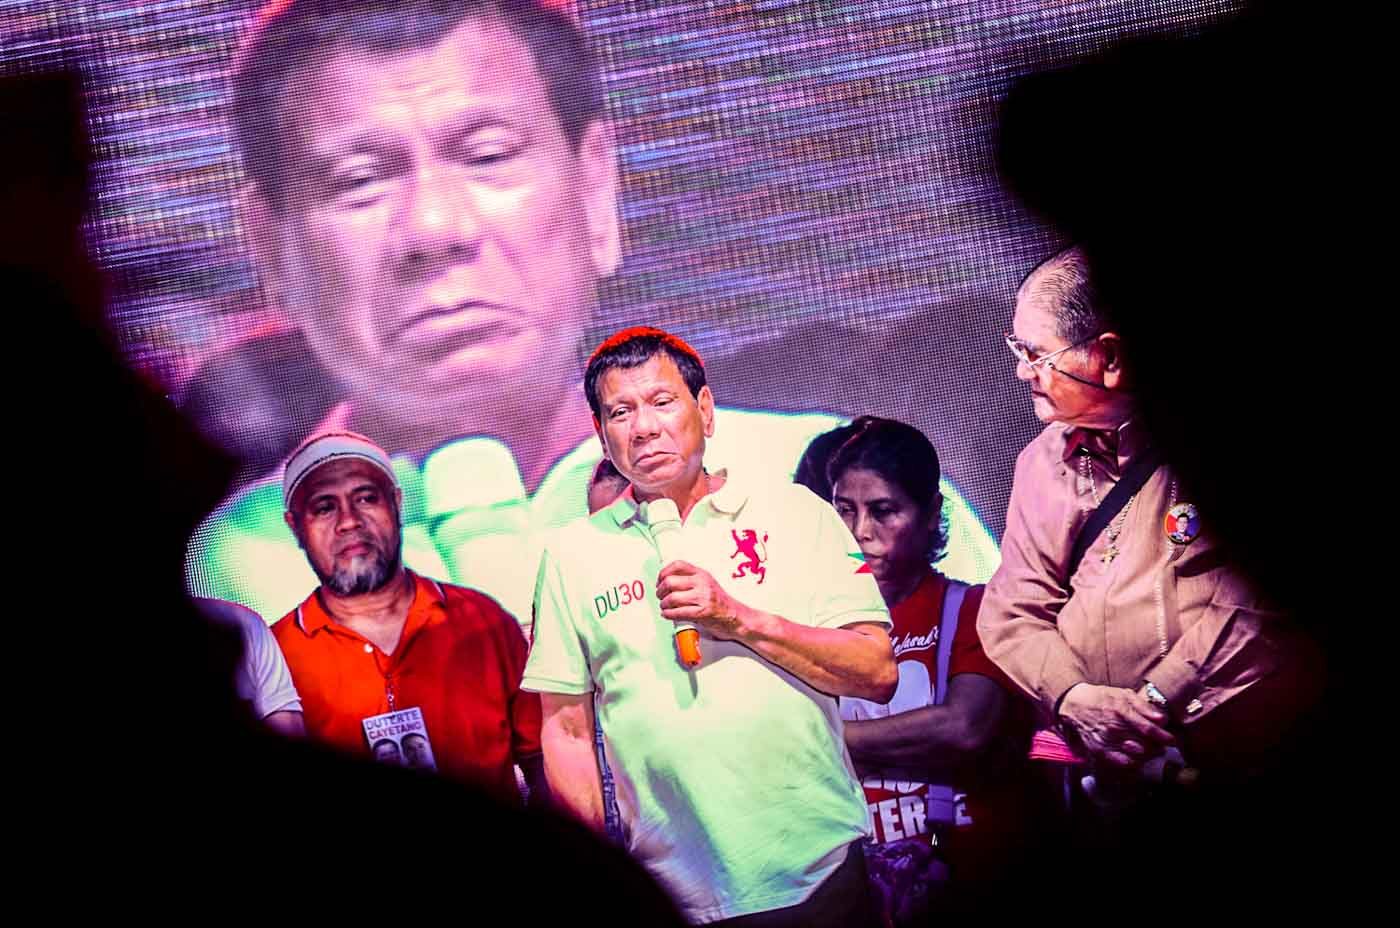 Amid bank controversy, Duterte keeps survey lead